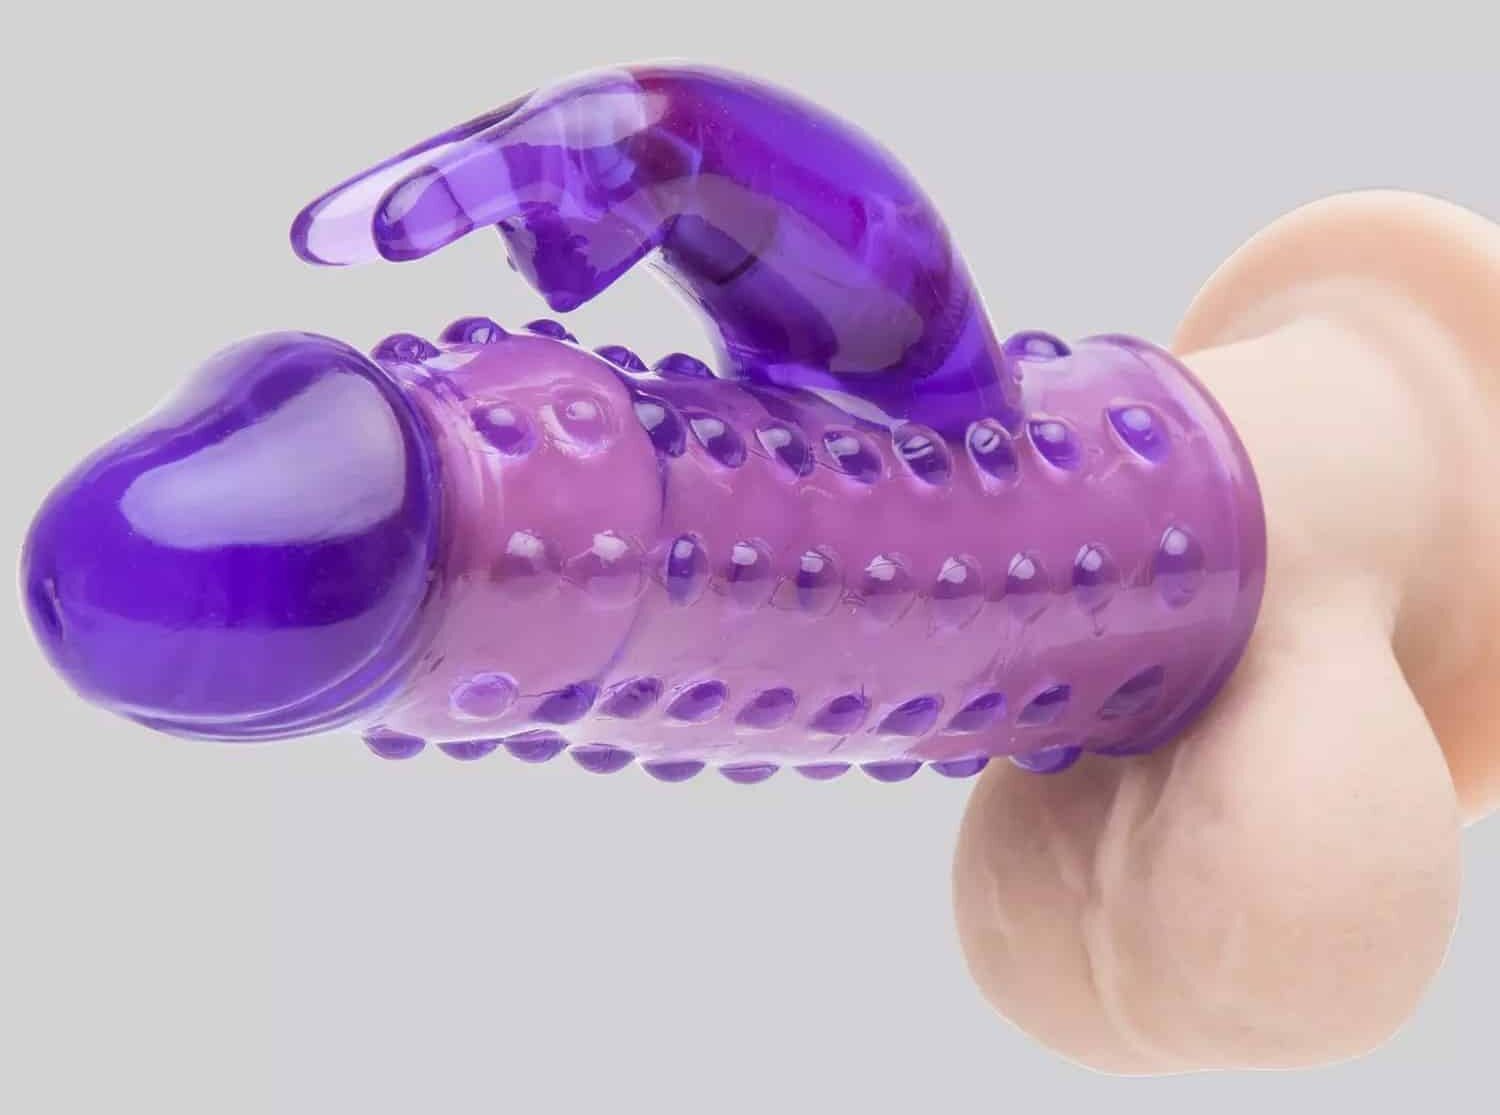 BASICS Vibrating Penis Sleeve with Clitoral Rabbit Vibrator. Slide 5